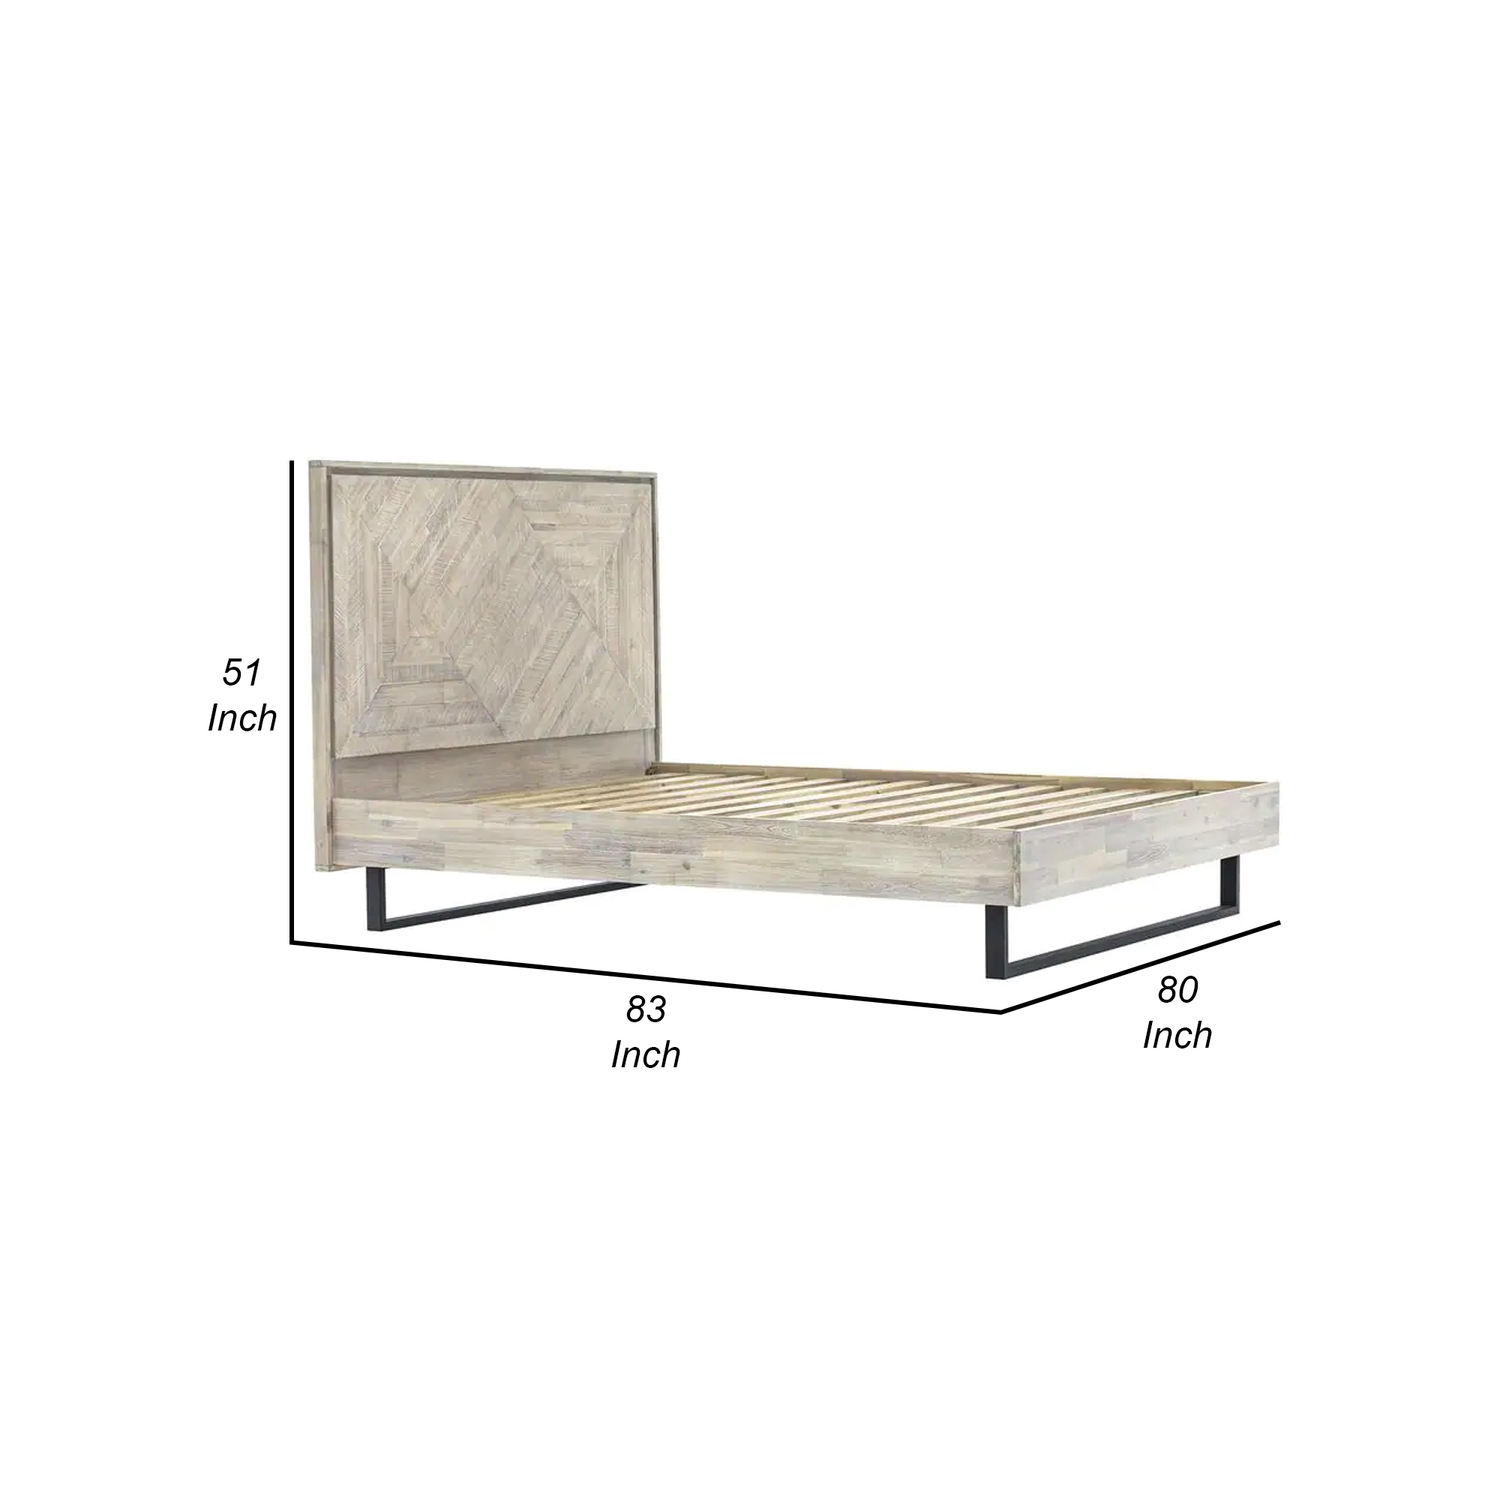 Benjara Rexi Acacia Wood King Platform Bed Frame, Metal Sled Base, Natural Brown - image 5 of 6